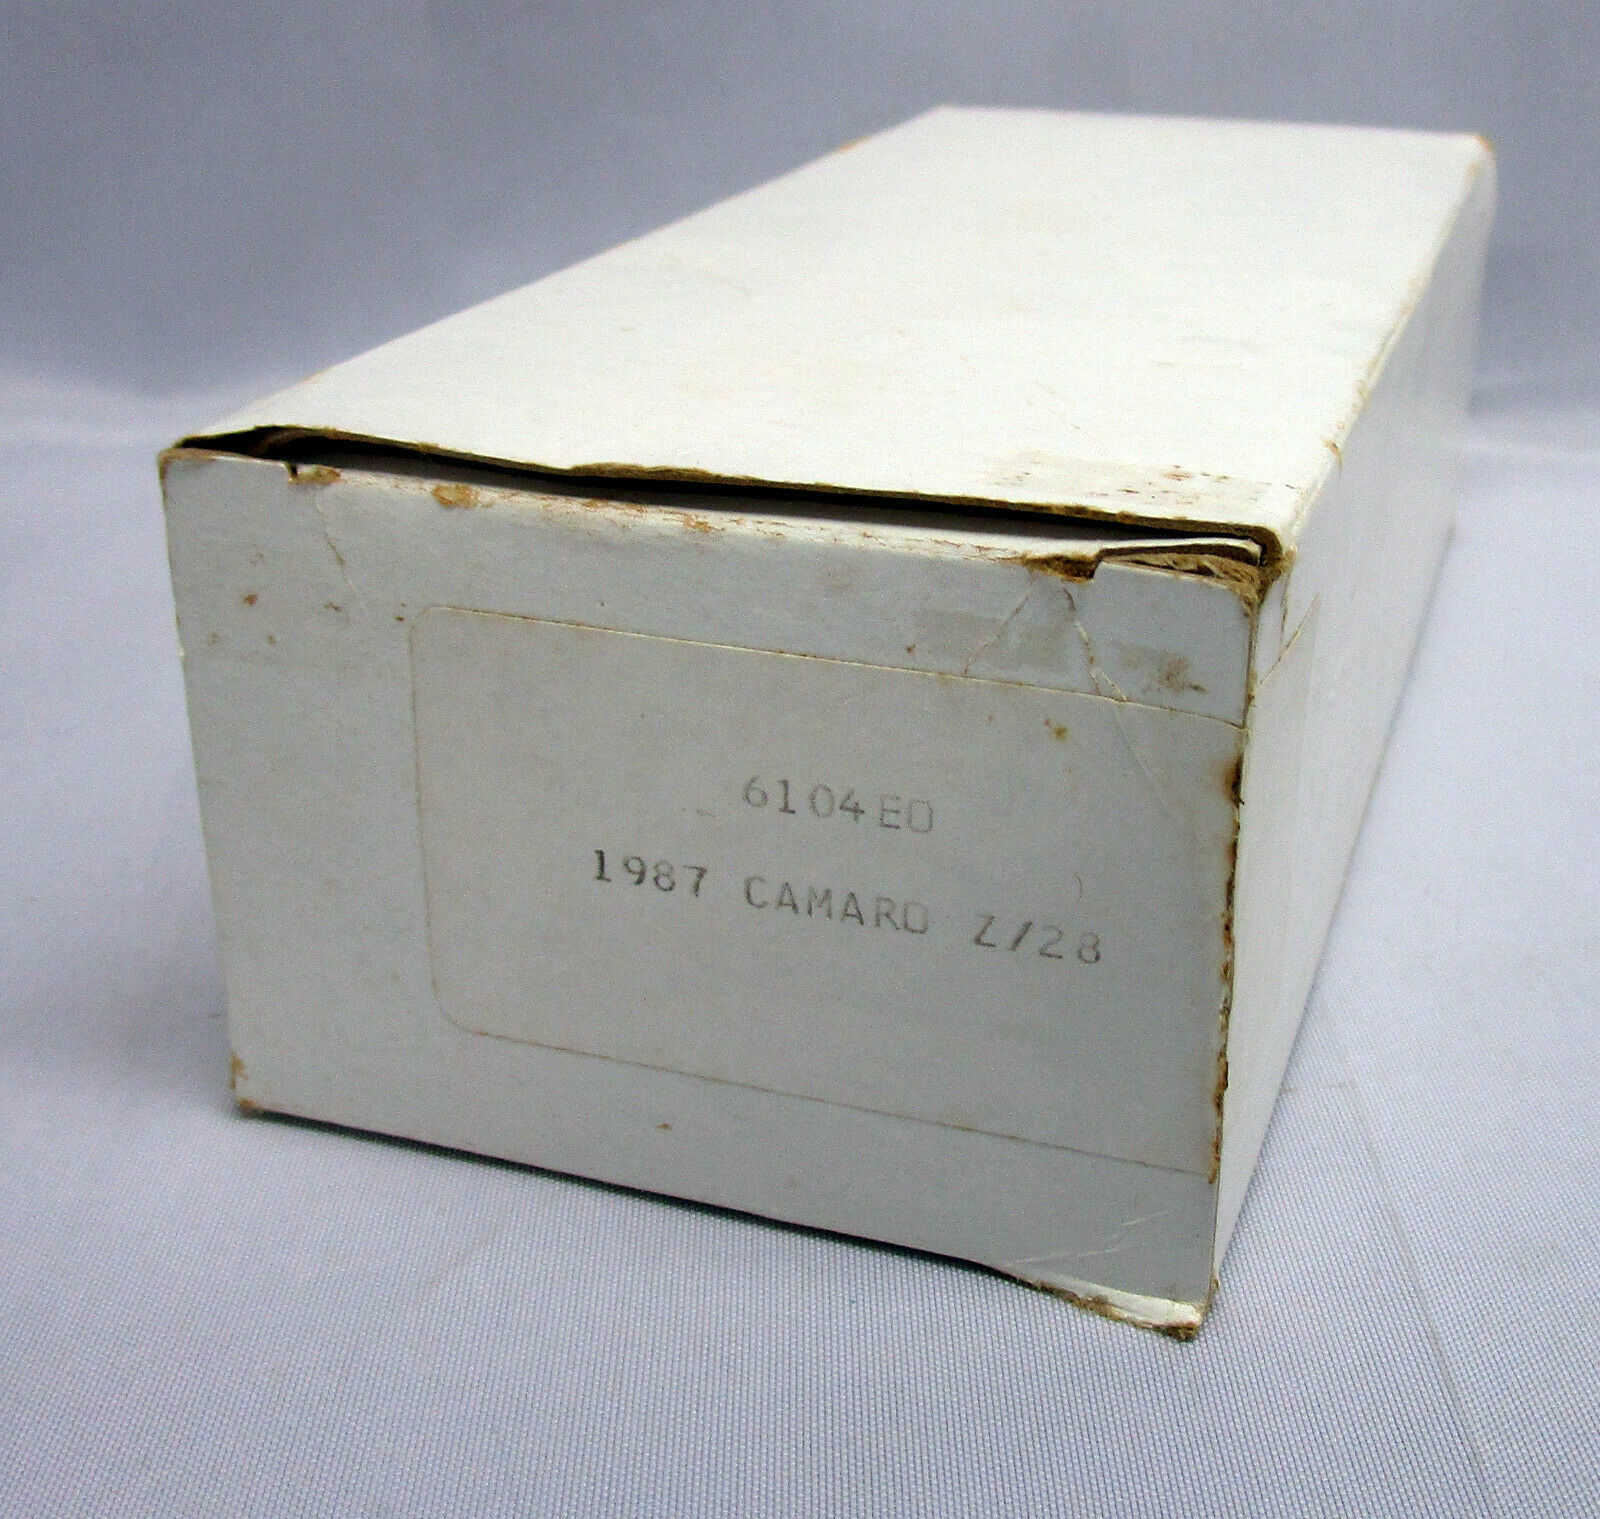 Empty Promo Boxes For 2 - 1987 Camaros Z/28 #6104eo